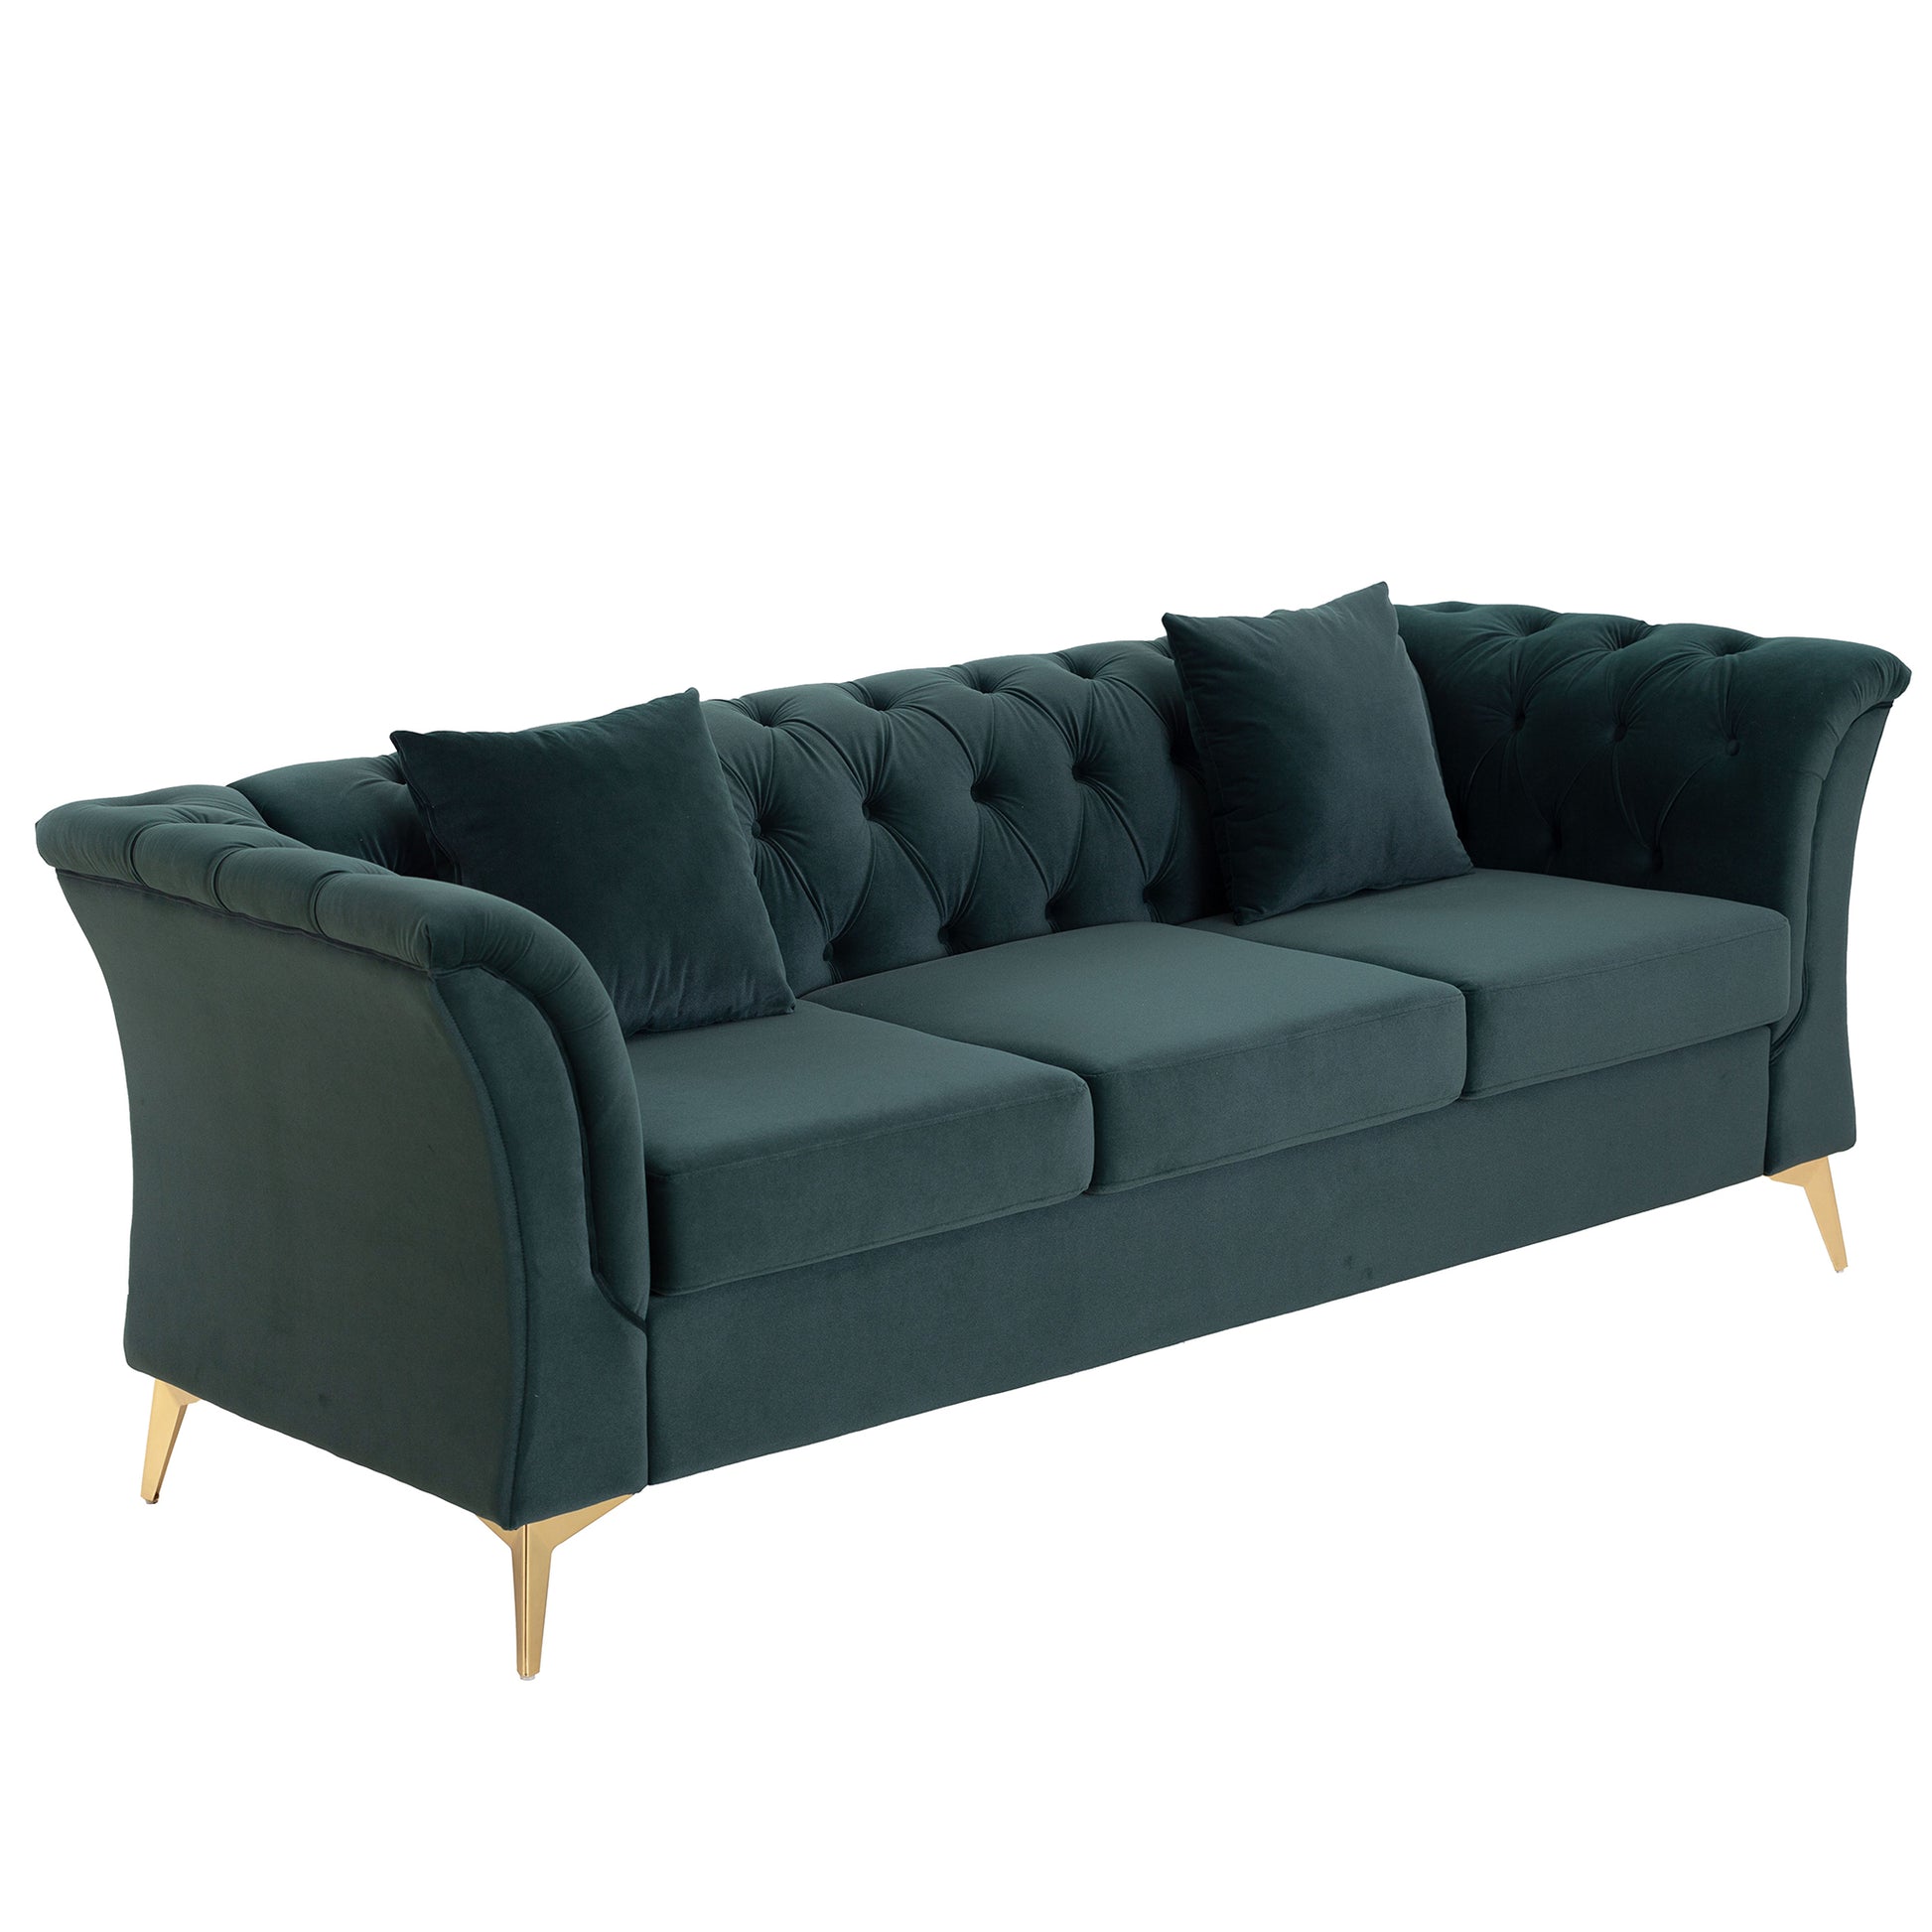 Modern Tufted Chesterfield Sofa in Green Velvet with Gold Legs